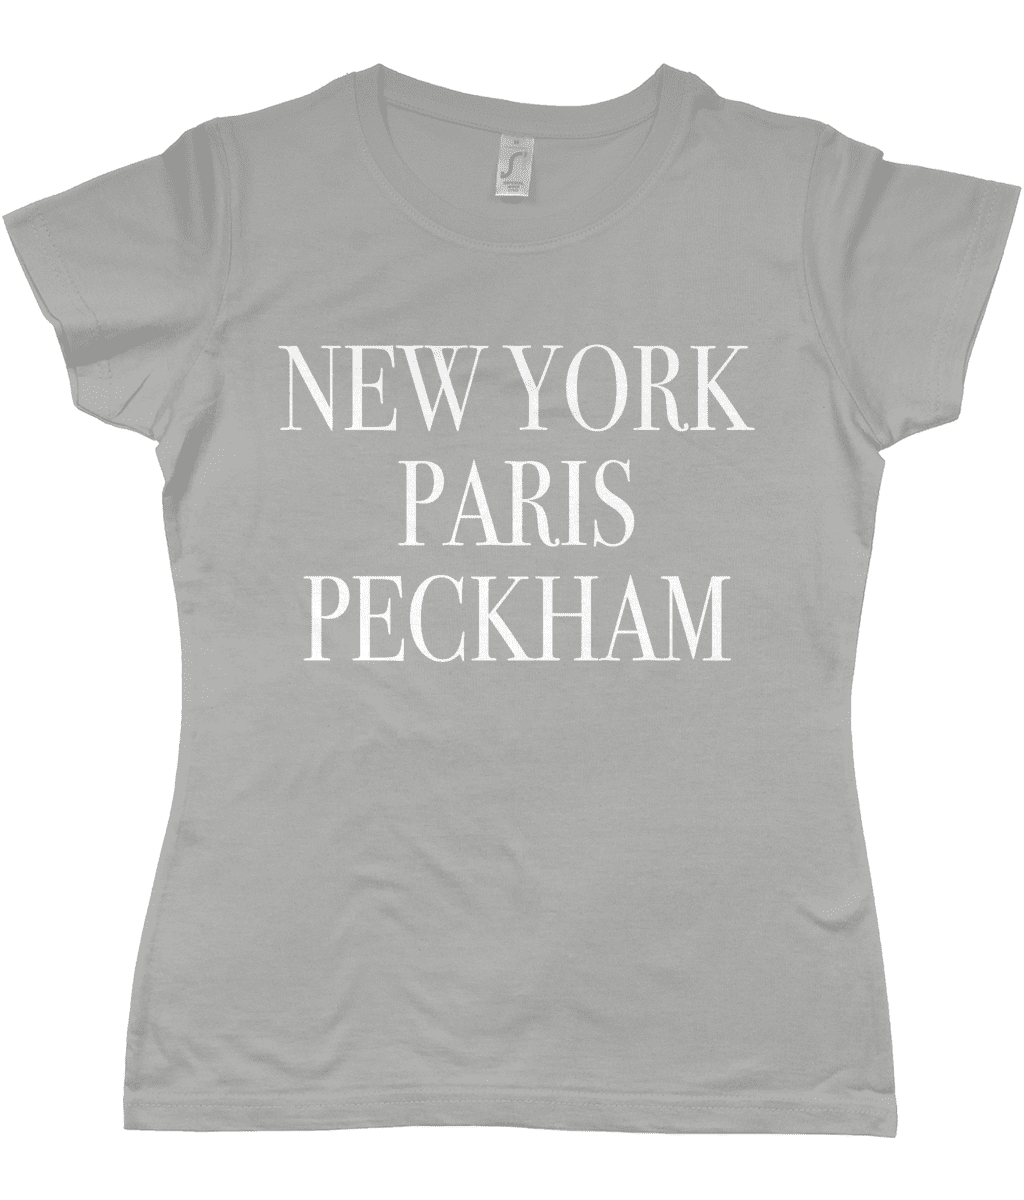 New York Paris Peckham Only Fools and Horses T-Shirt Grey Marl